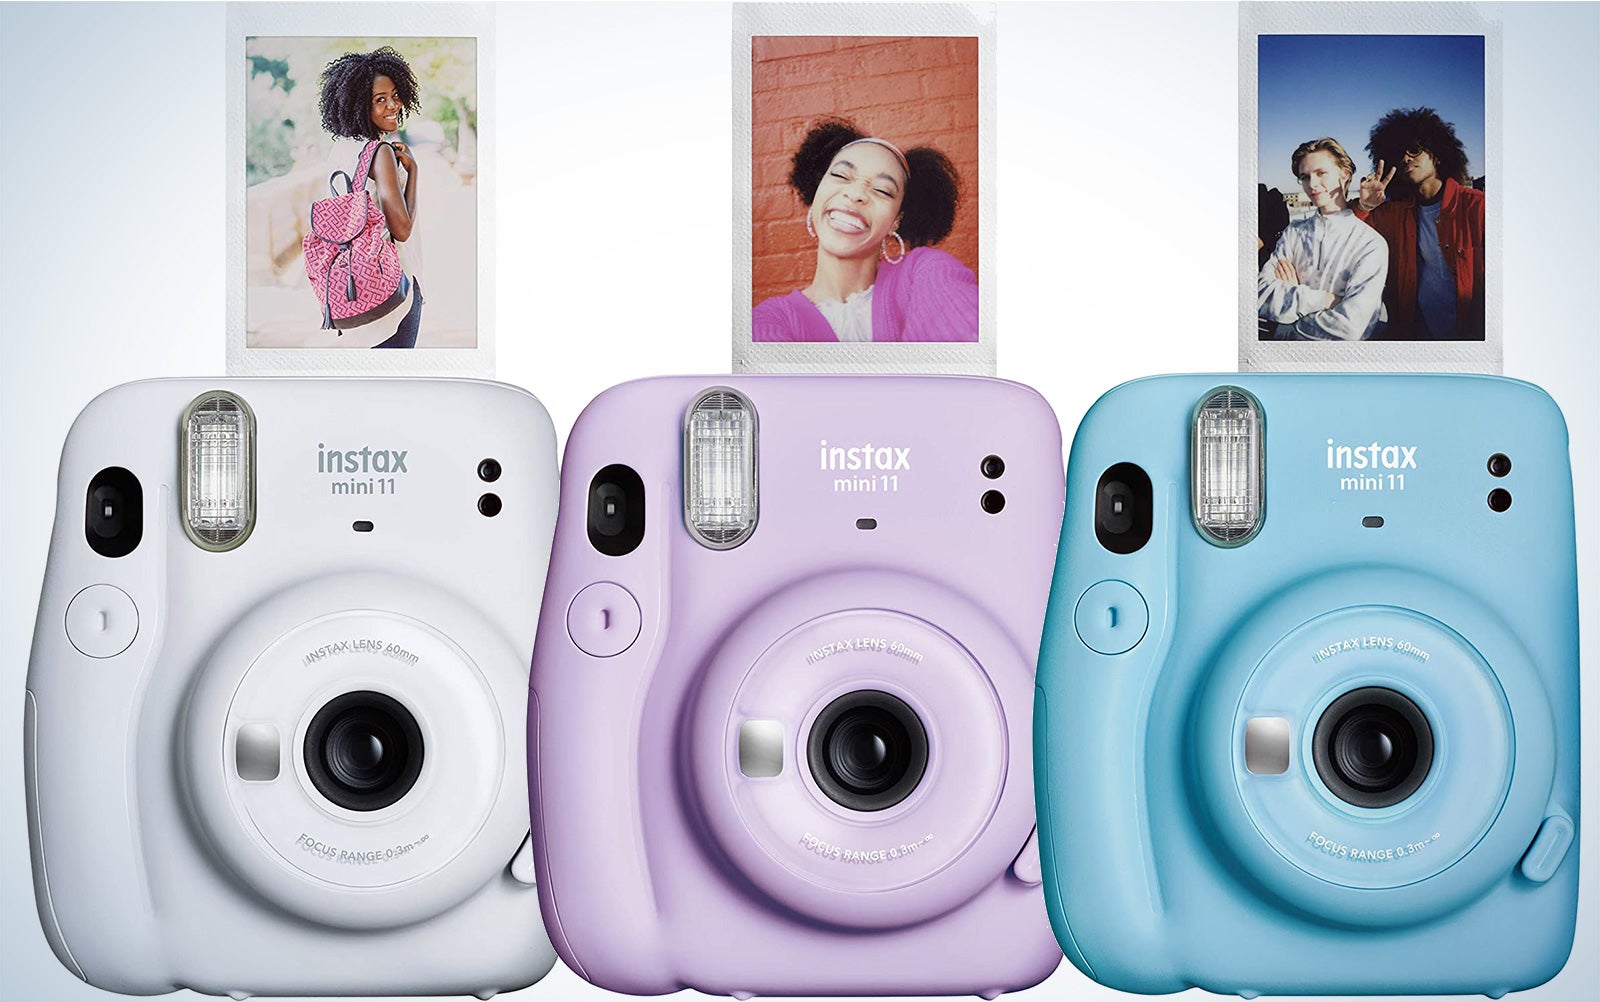 Save on Fujifilm’s Instax Mini 11 camera during Amazon Prime Early Access